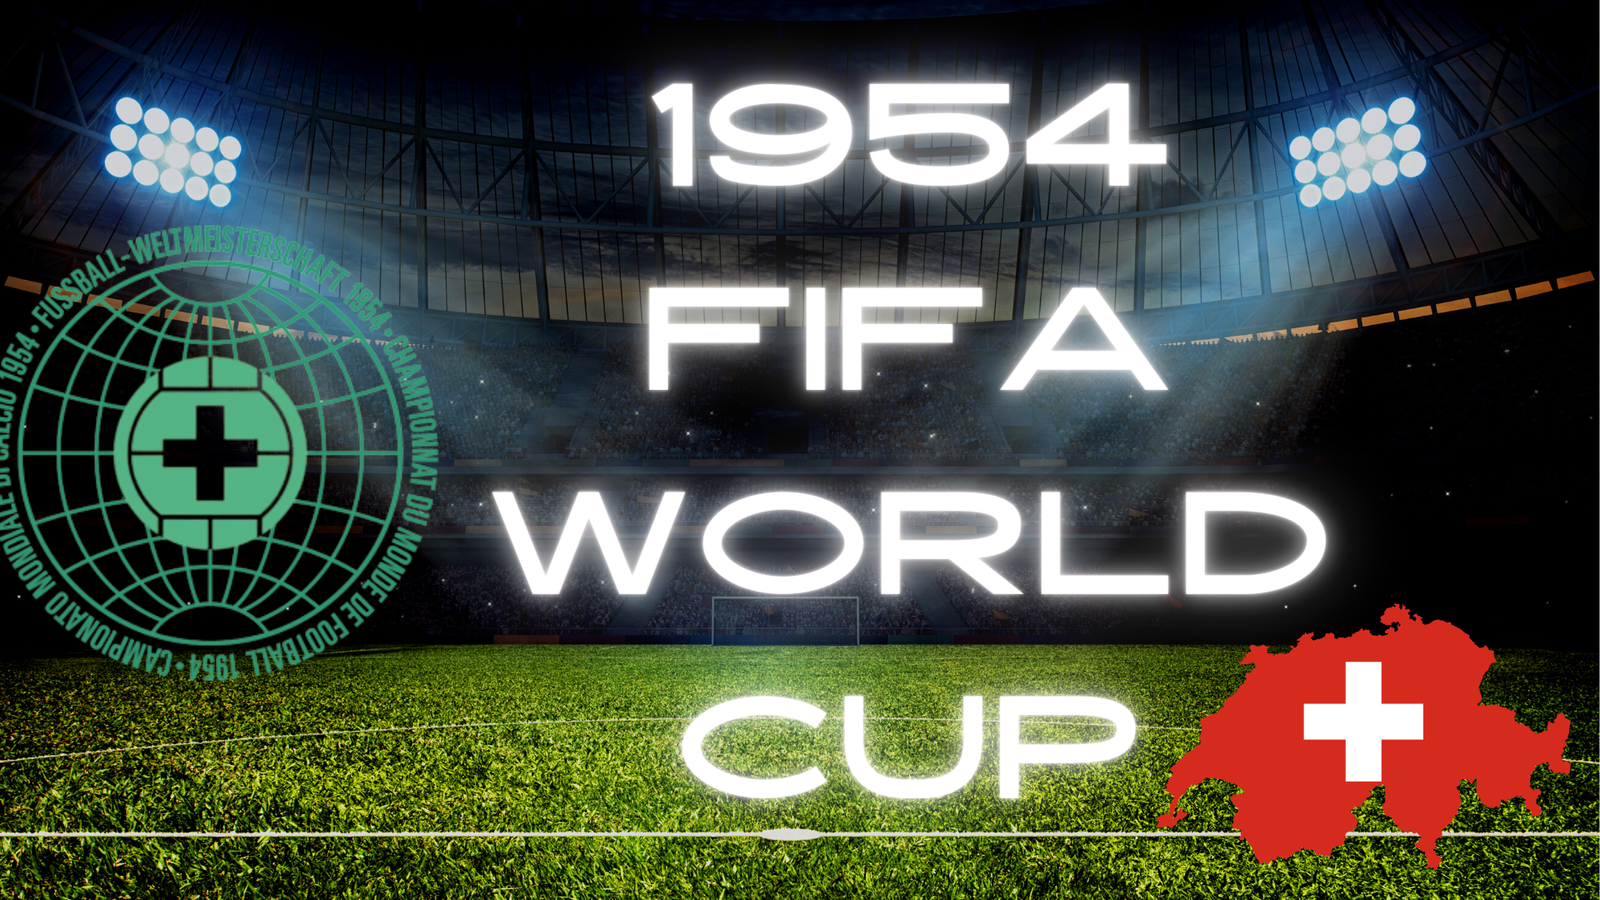 Fifa World Cup 1954